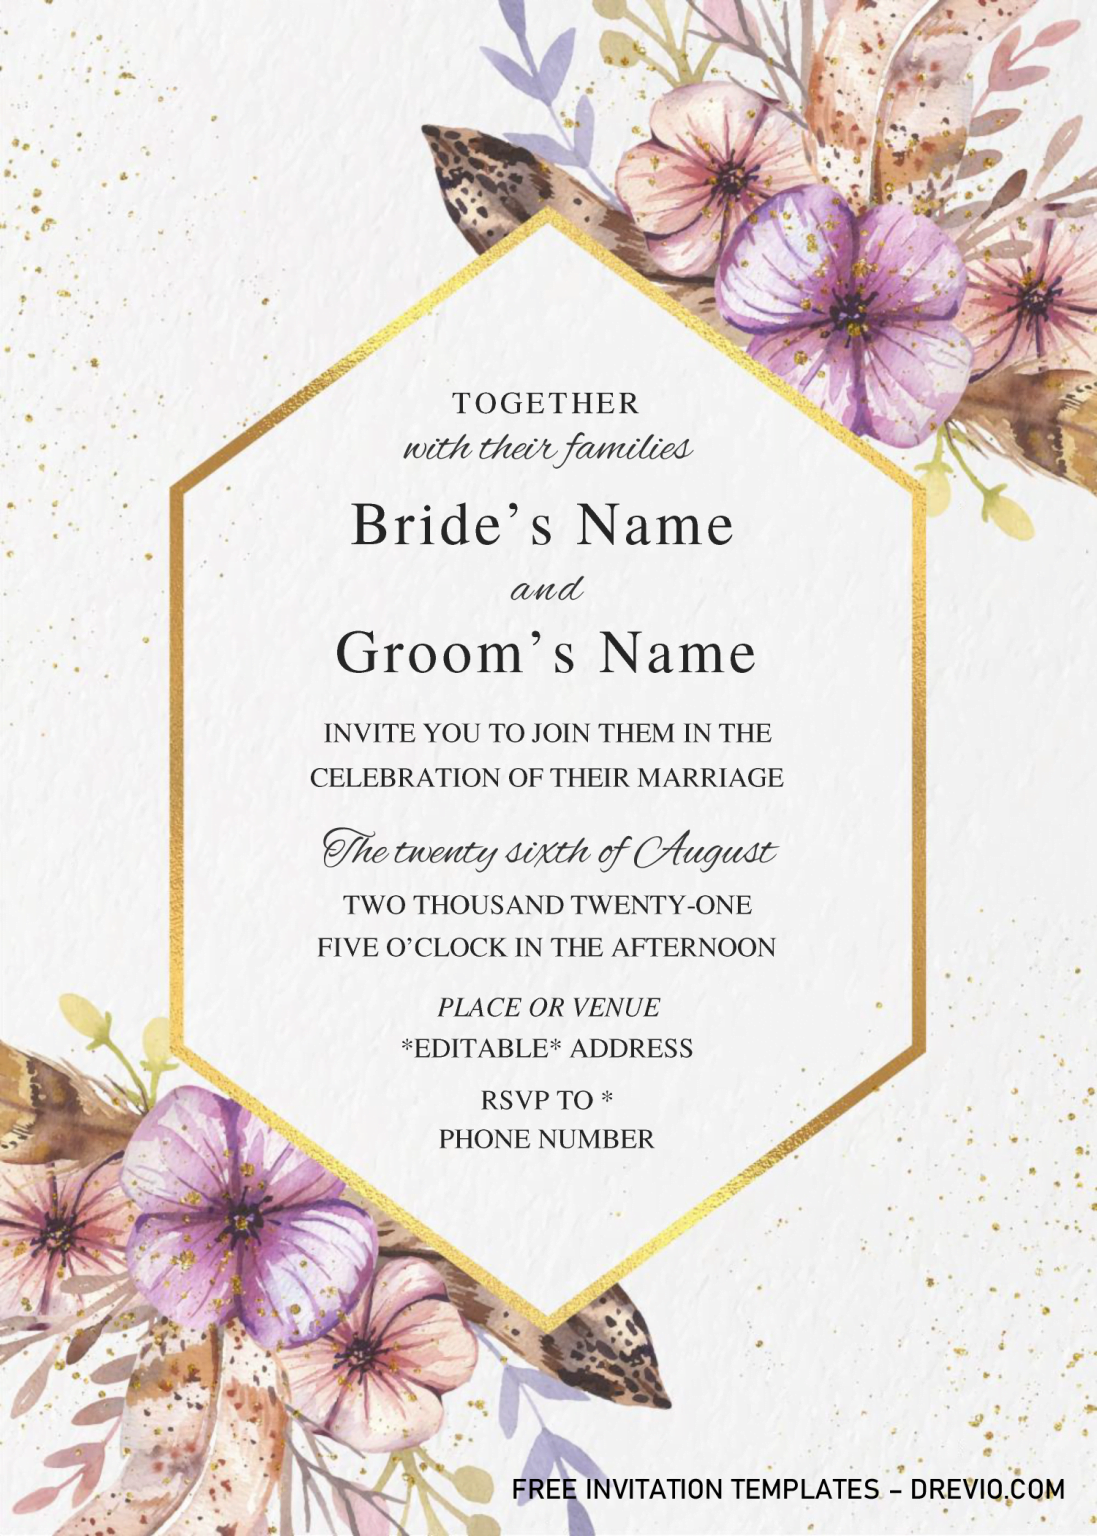 Boho Floral Wedding Invitation Templates – Editable .Docx | Download ...